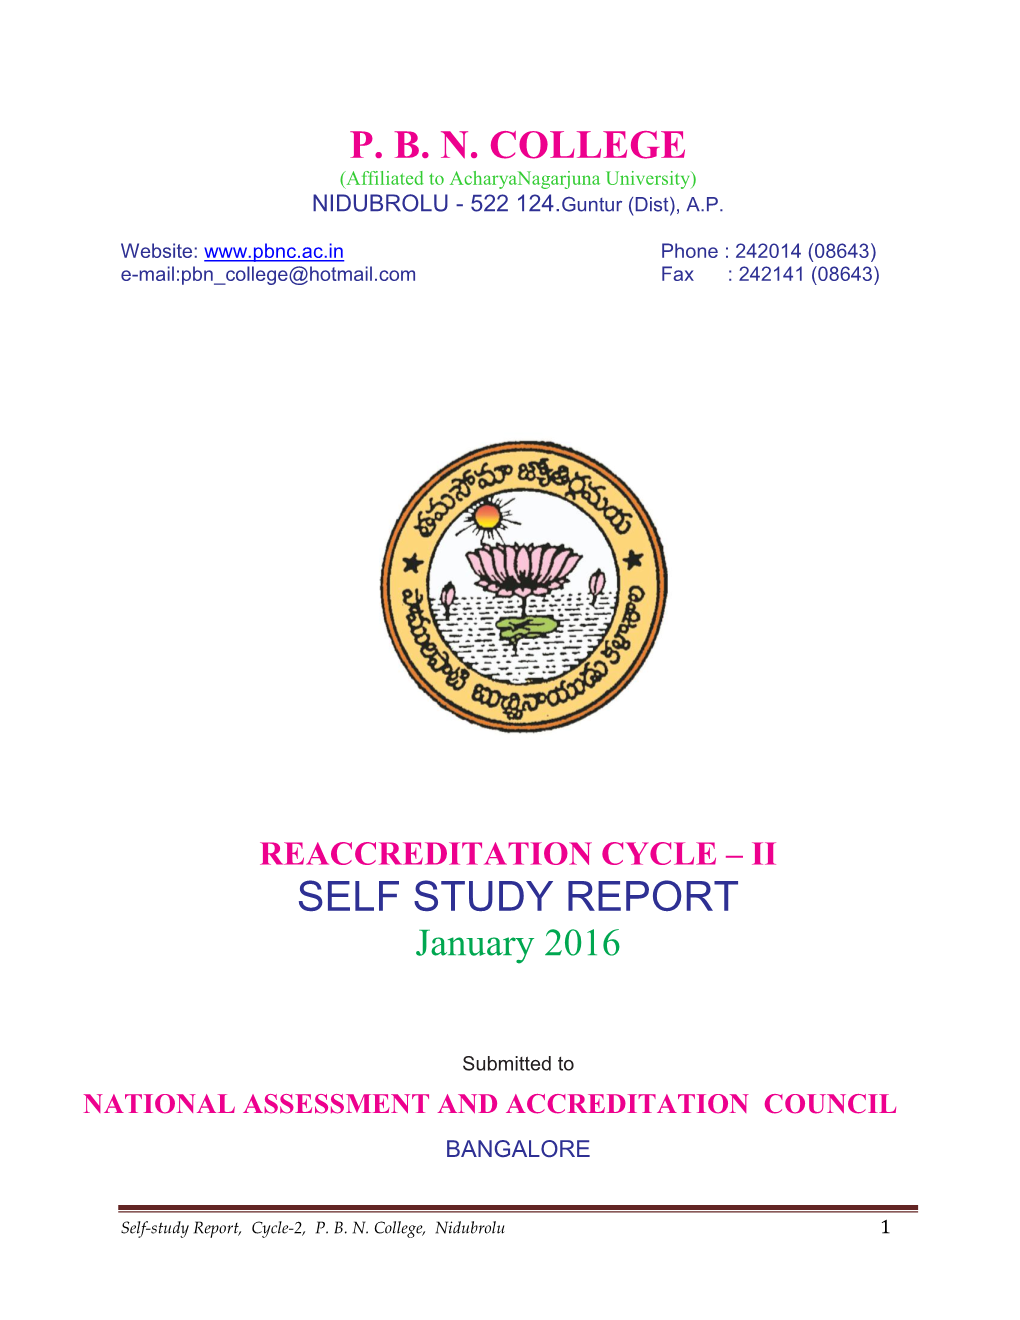 SELF STUDY REPORT January 2016